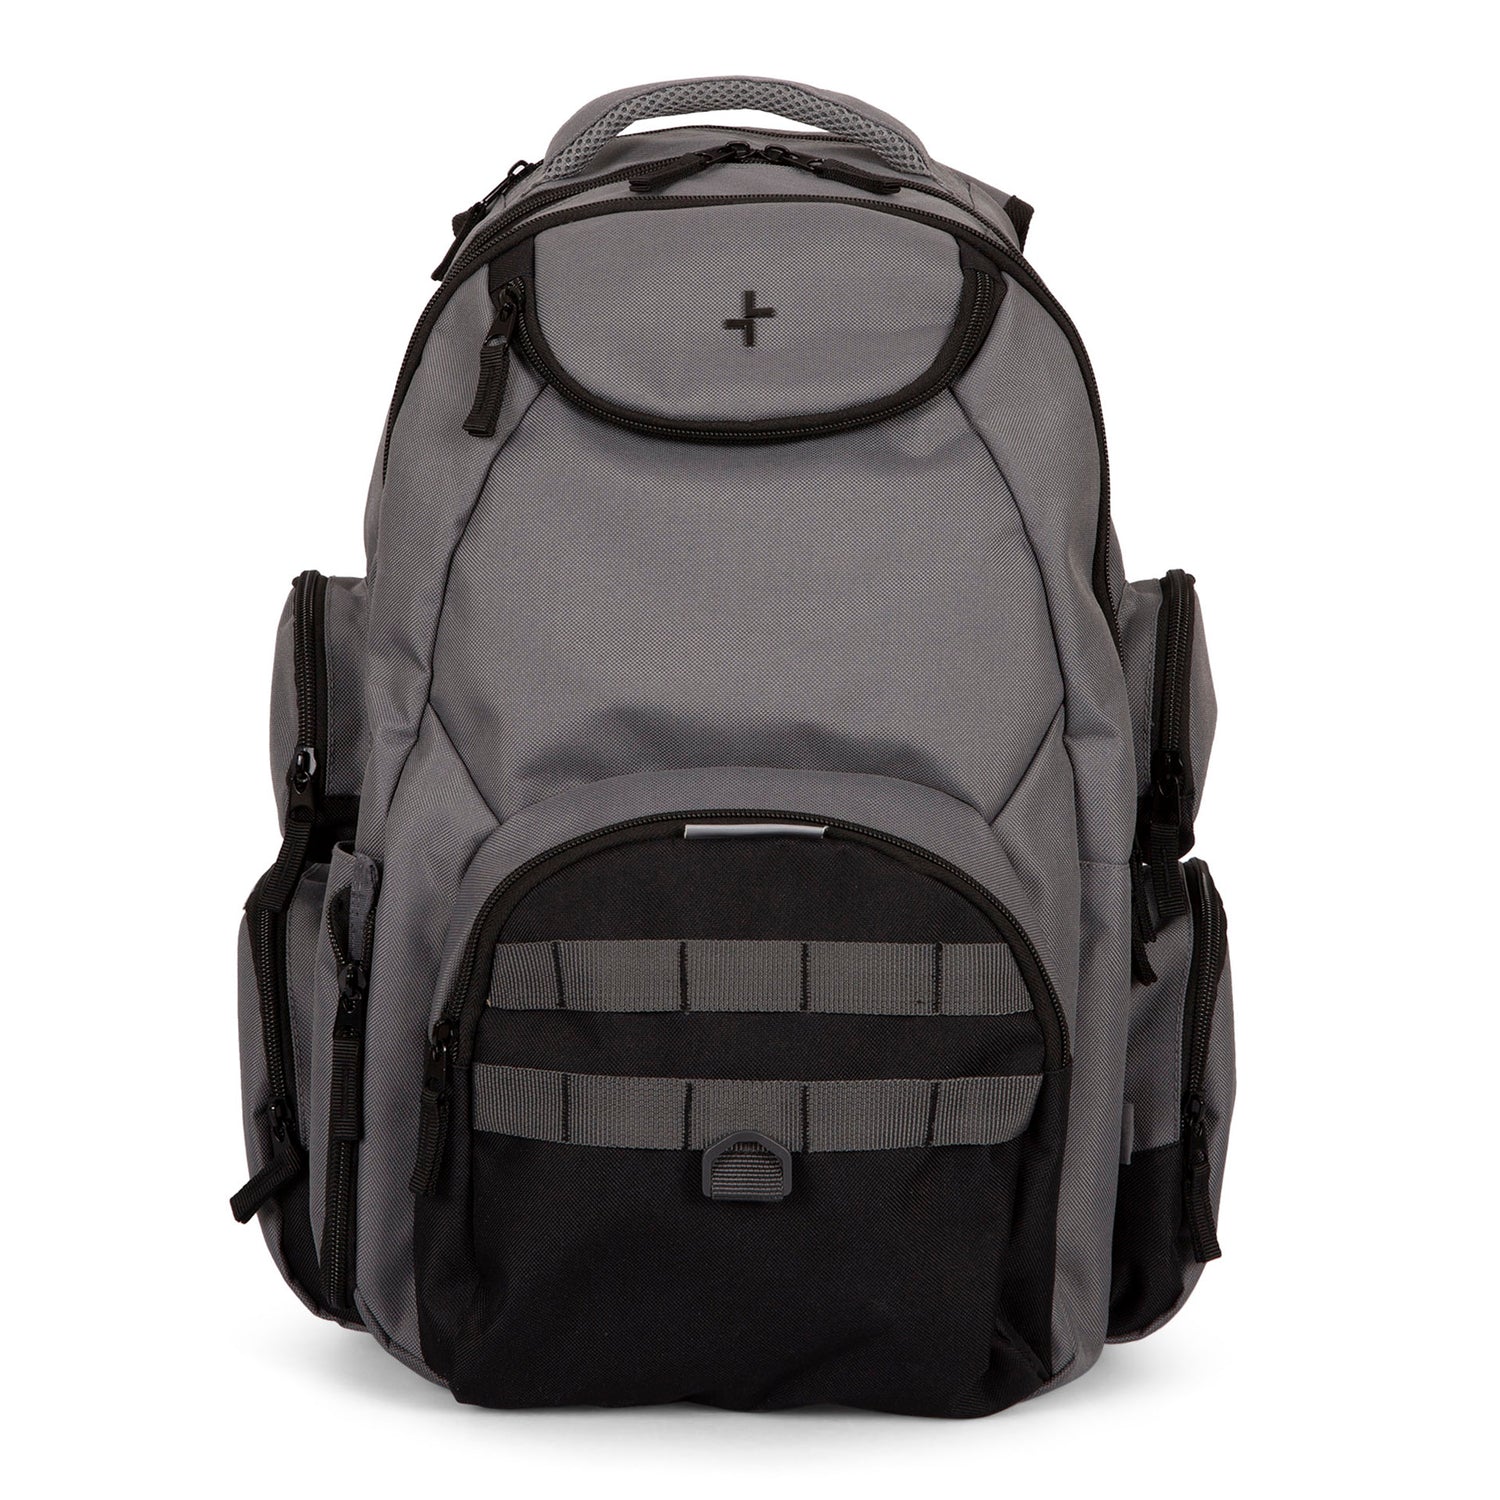 MultiSac Milton Backpack